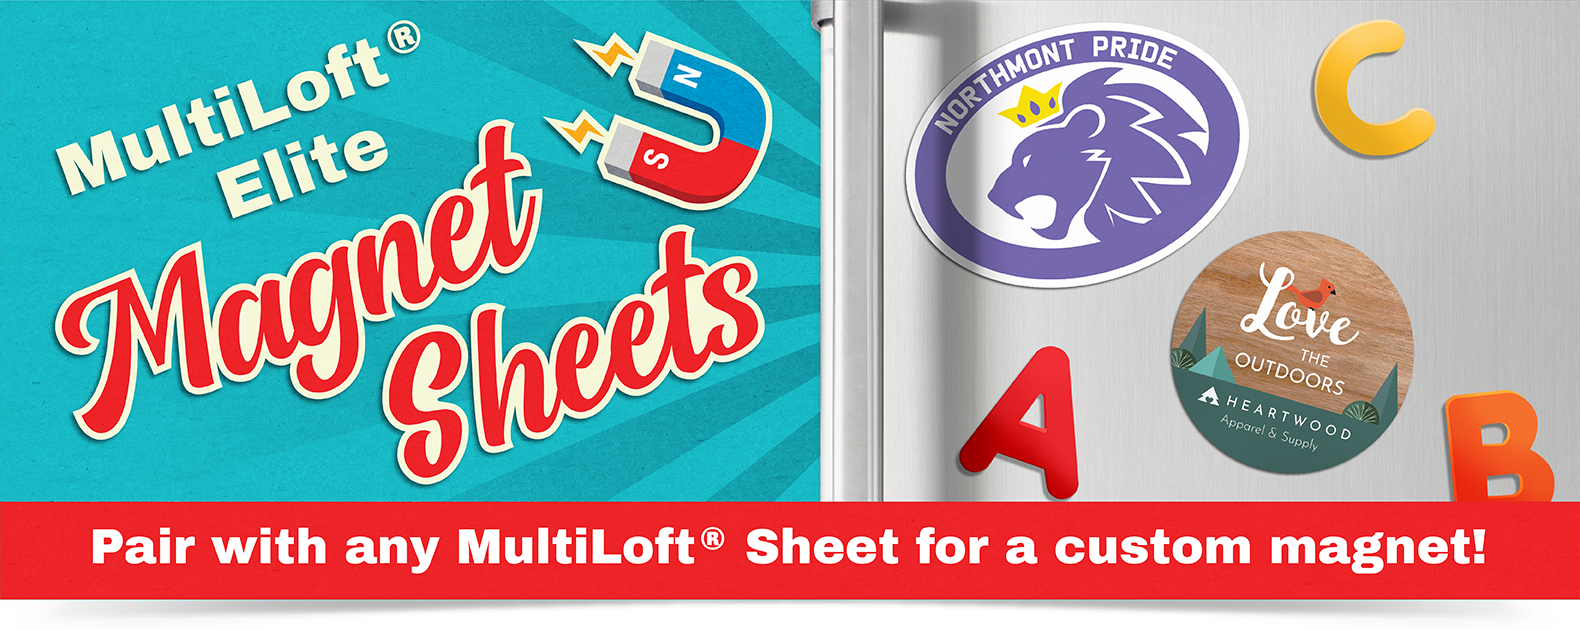 MultiLoft® Elite Magnet Sheets